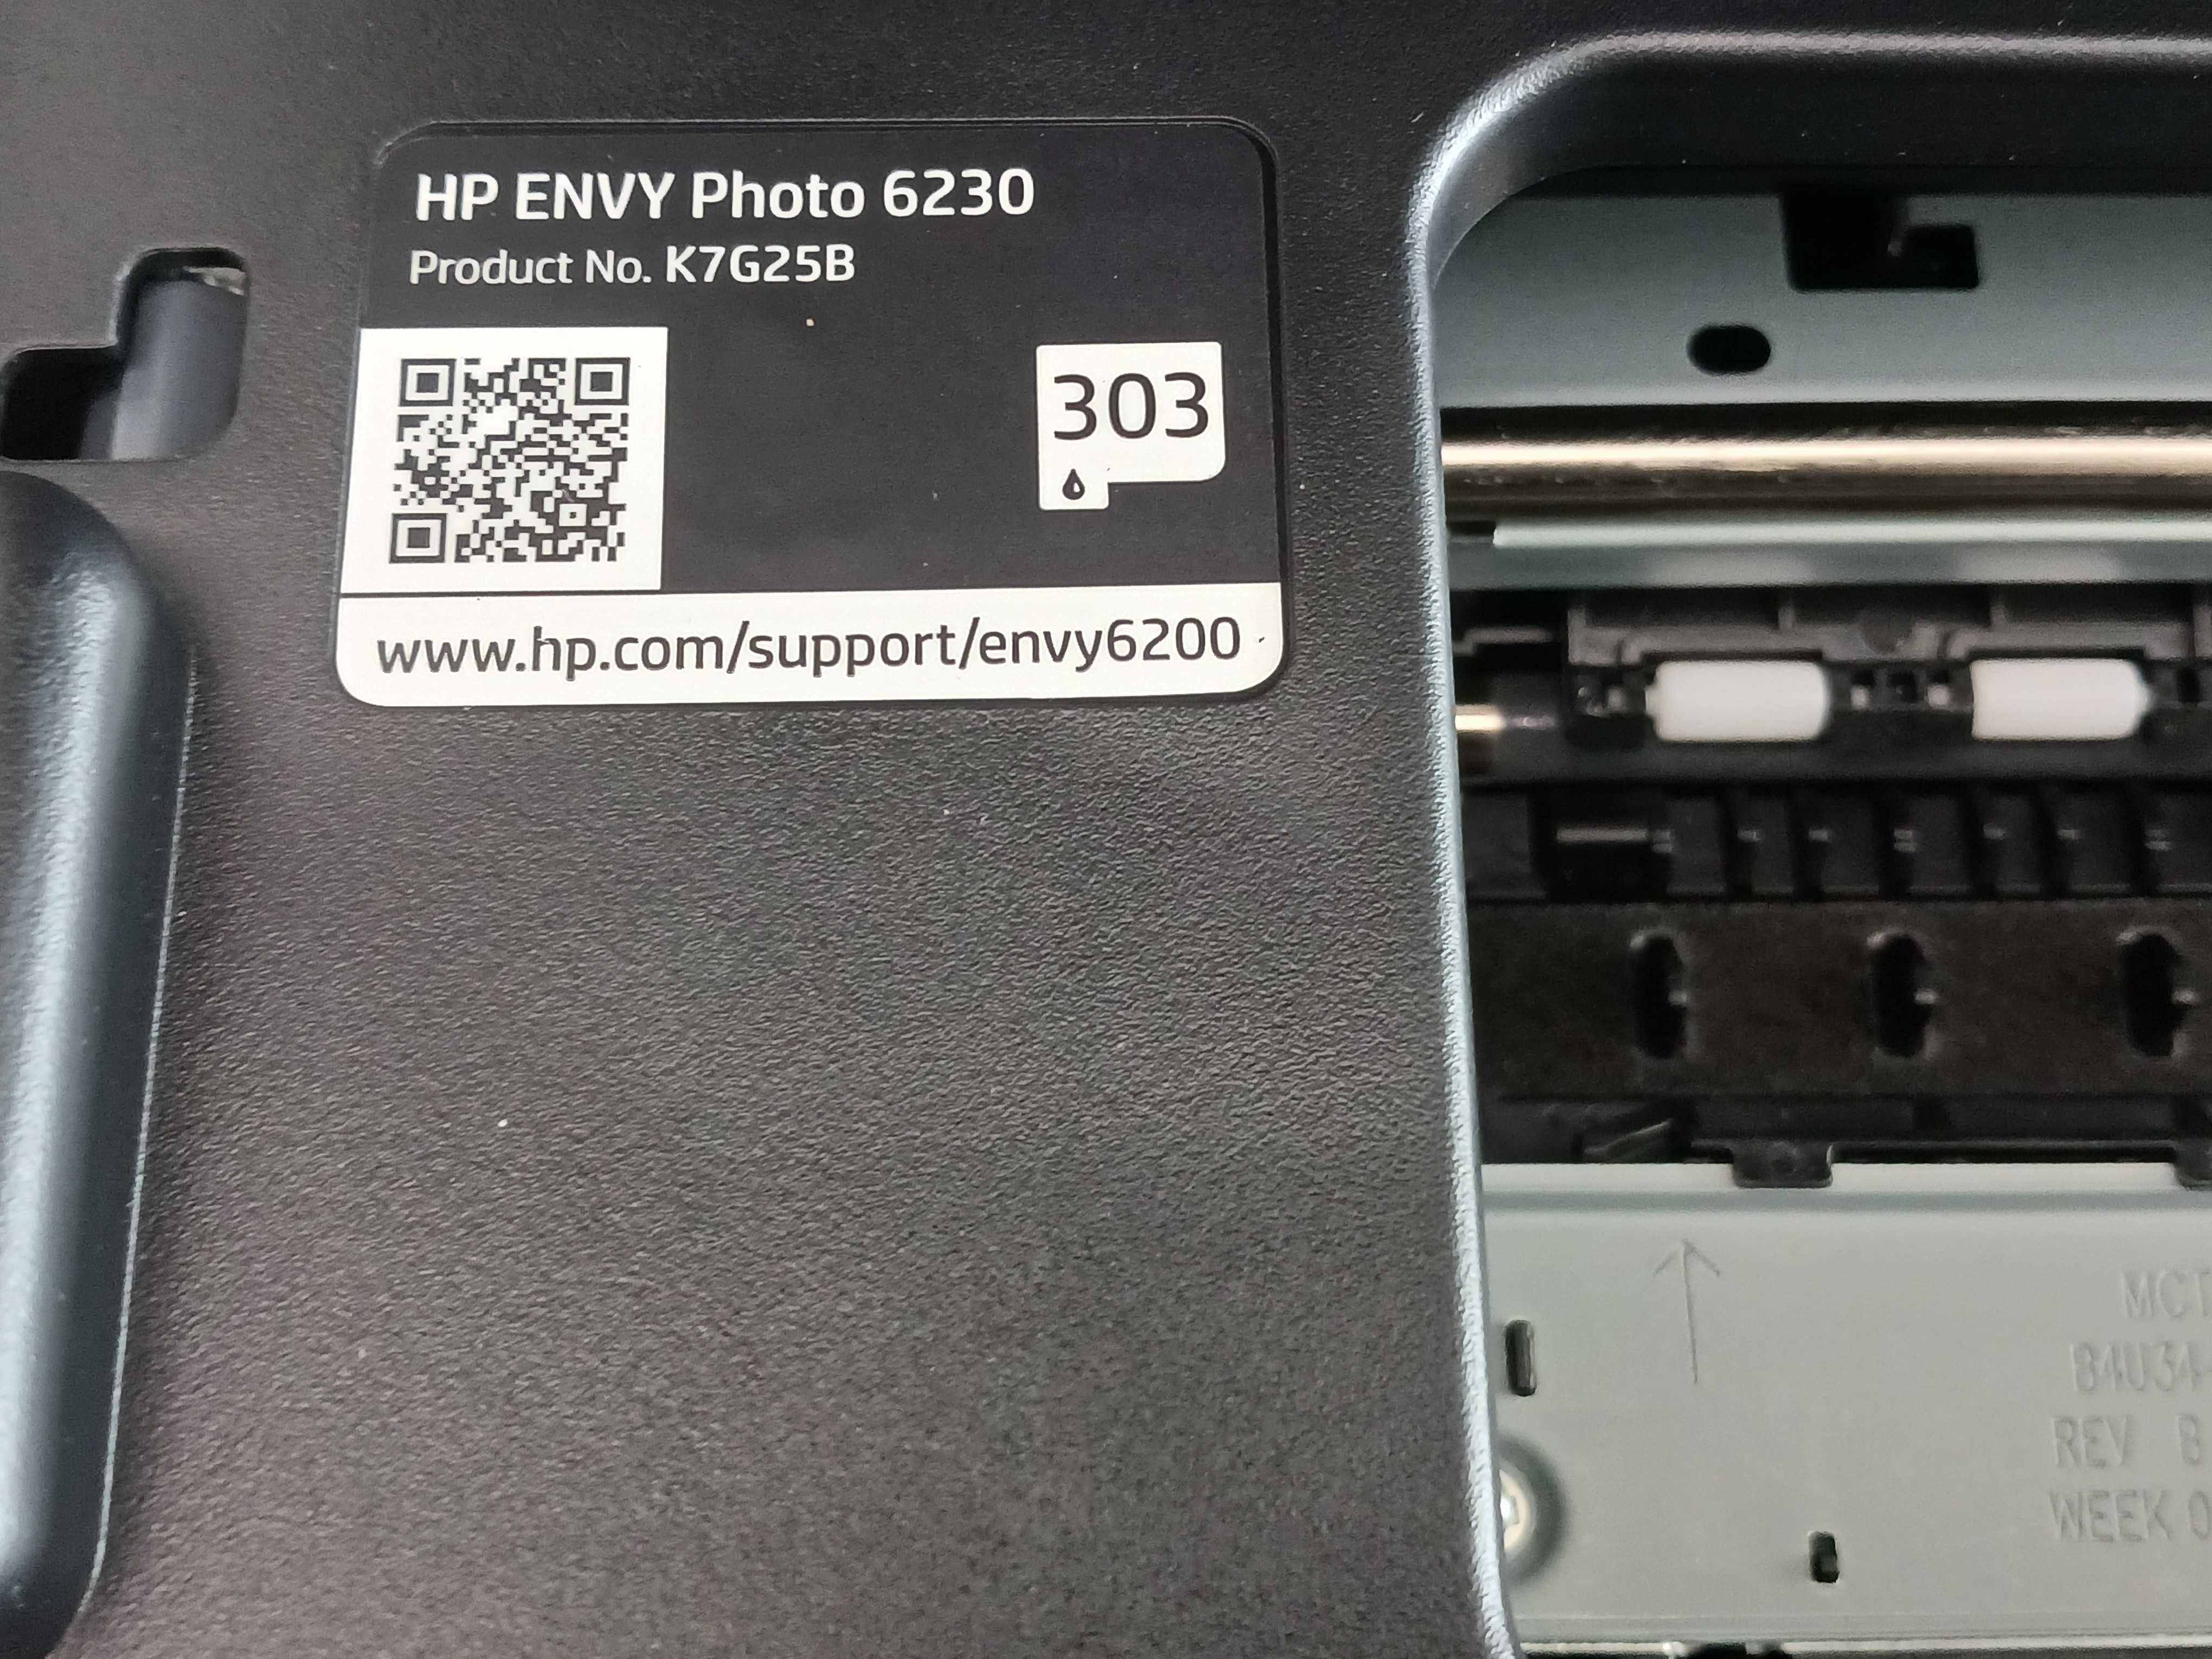 Impressora multifunções HP ENVY Photo 6230